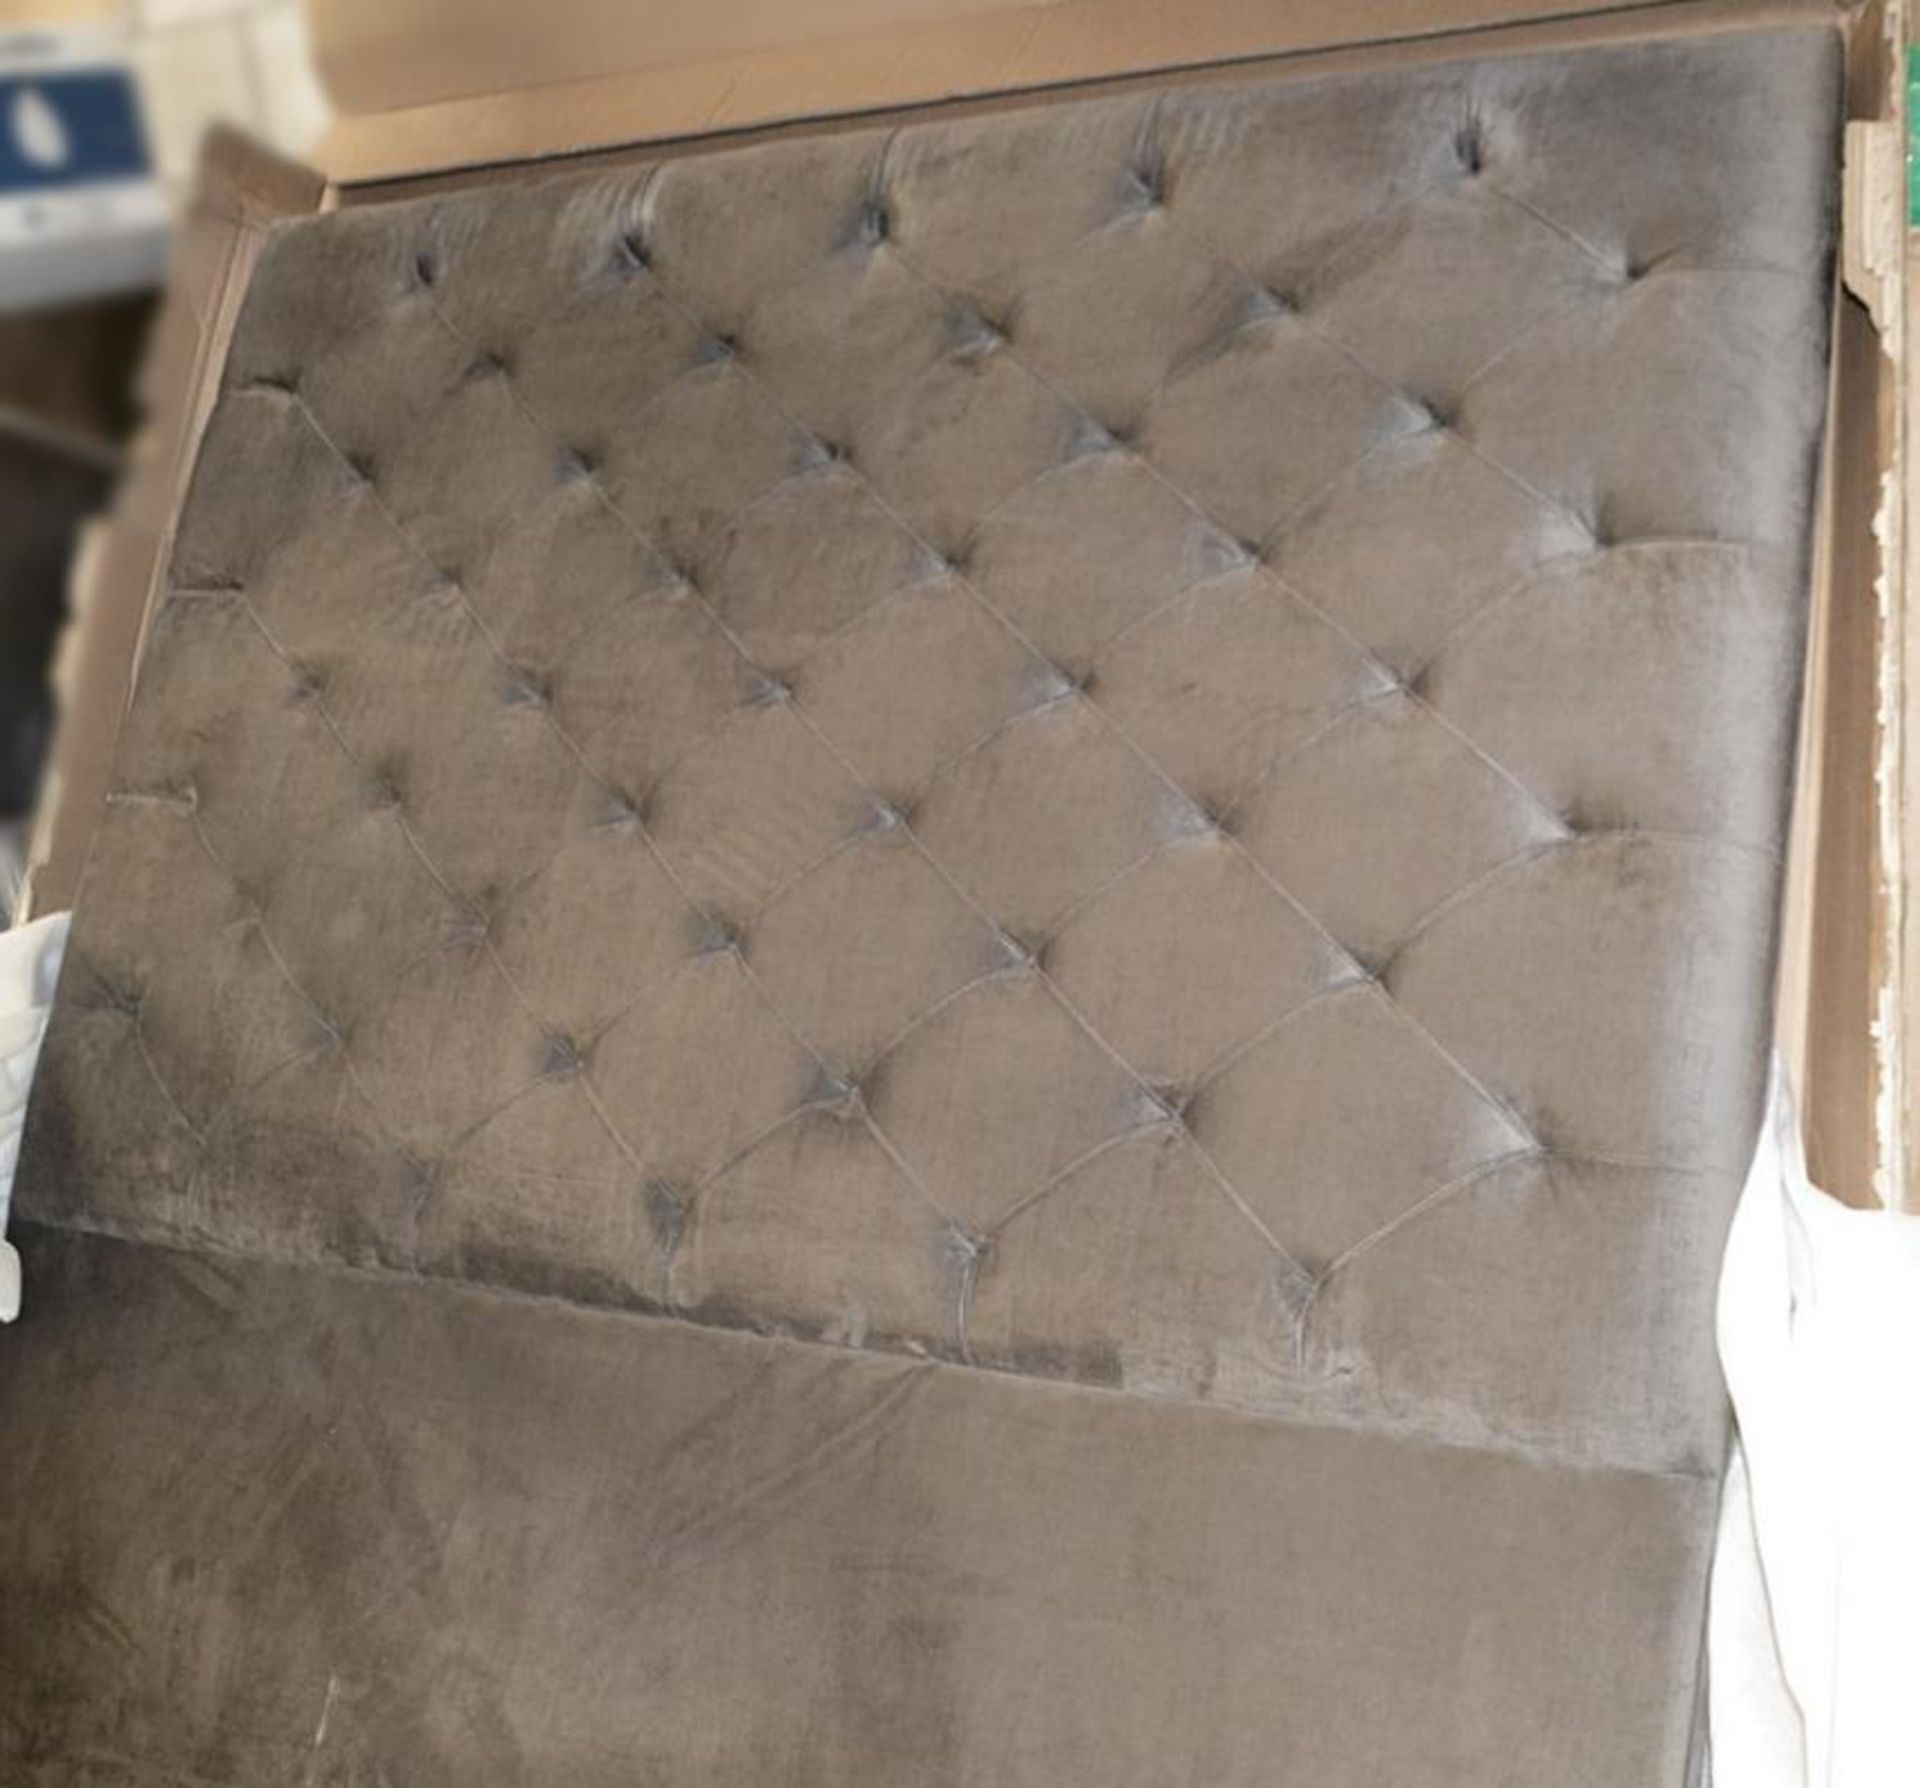 1 x Eichholtz 'Cesare ' Chesterfield-Inspired Upholstered Headboard In A Granite Grey Velvet - Dime - Image 6 of 10